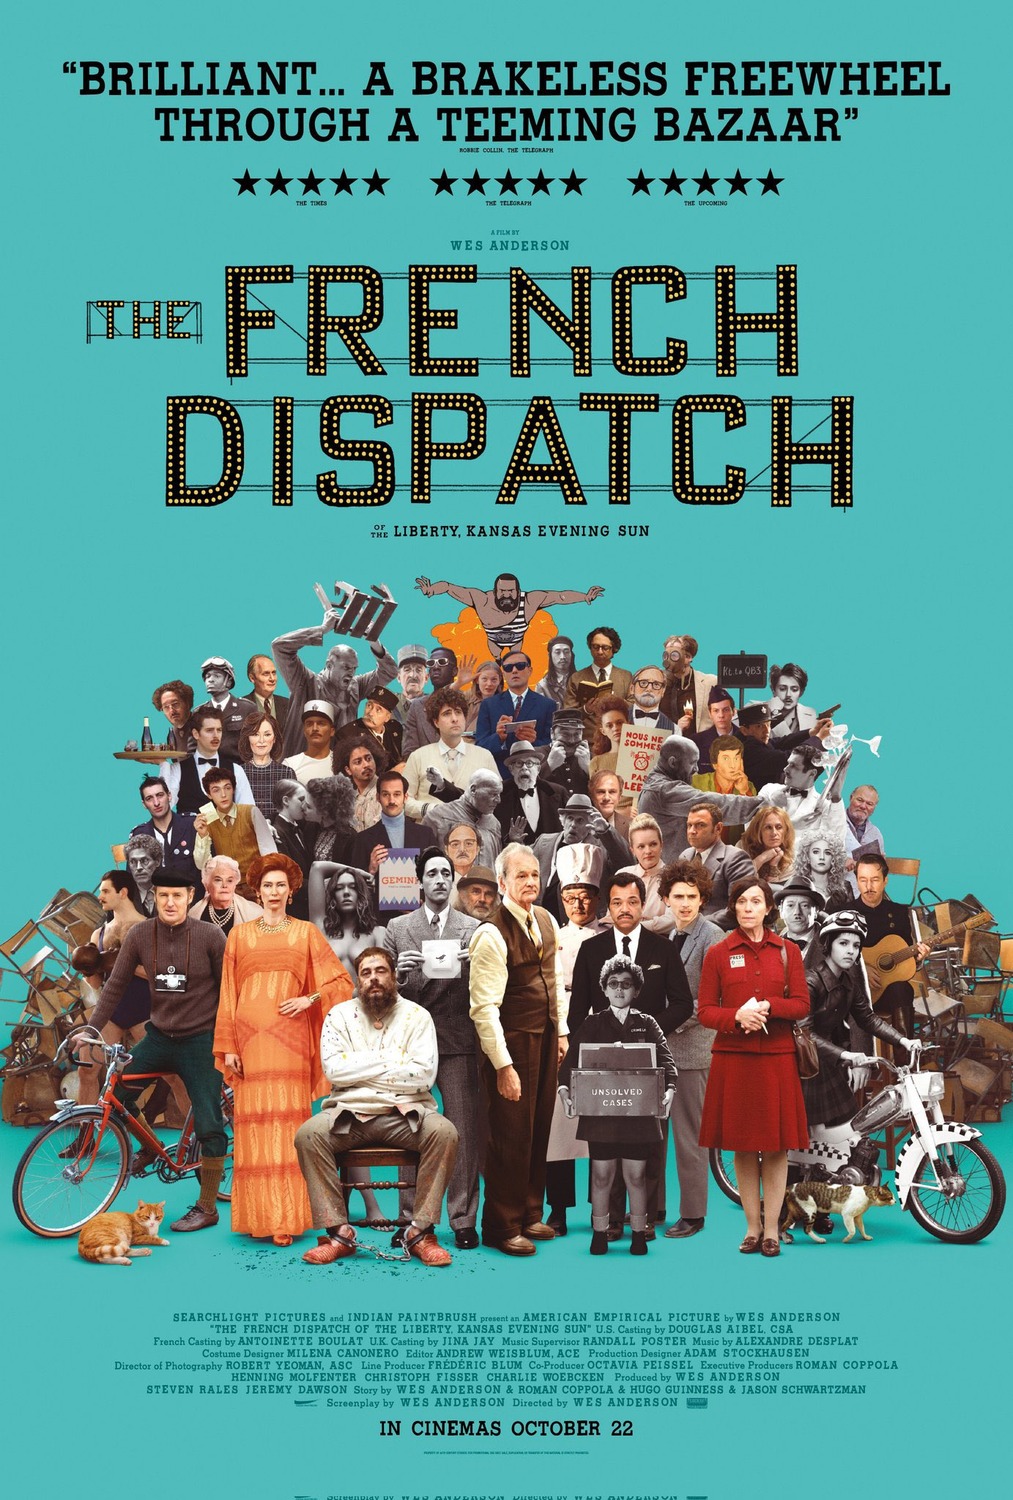 The French Dispatch (15) - Wokingham Film Society